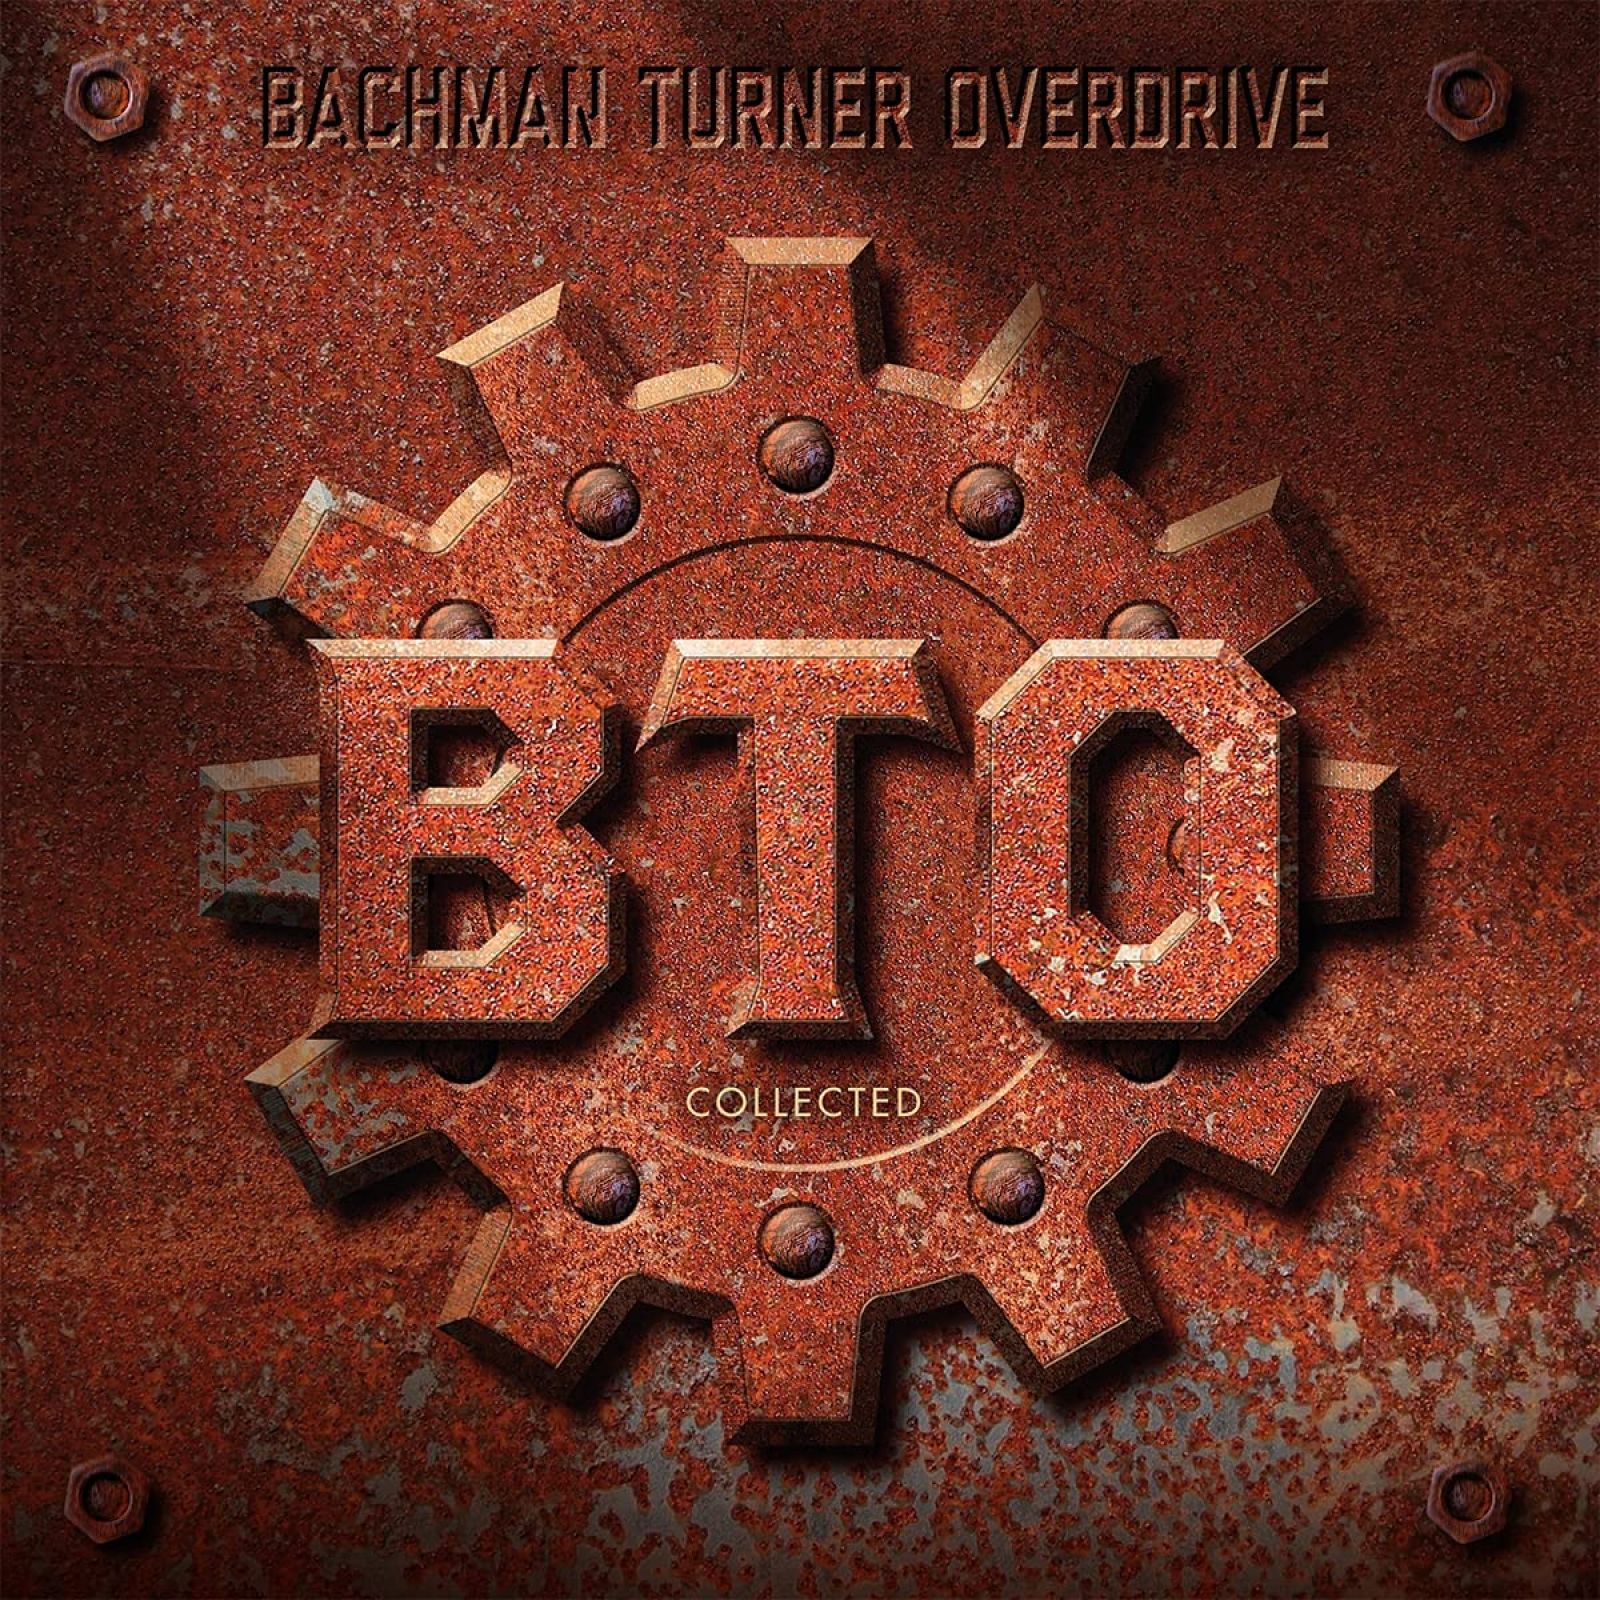 Виниловая пластинка Bachman Turner Overdrive, Collected: Greatest Songs (0600753911327) старый винил mercury bachman turner overdrive bto s greatest lp used